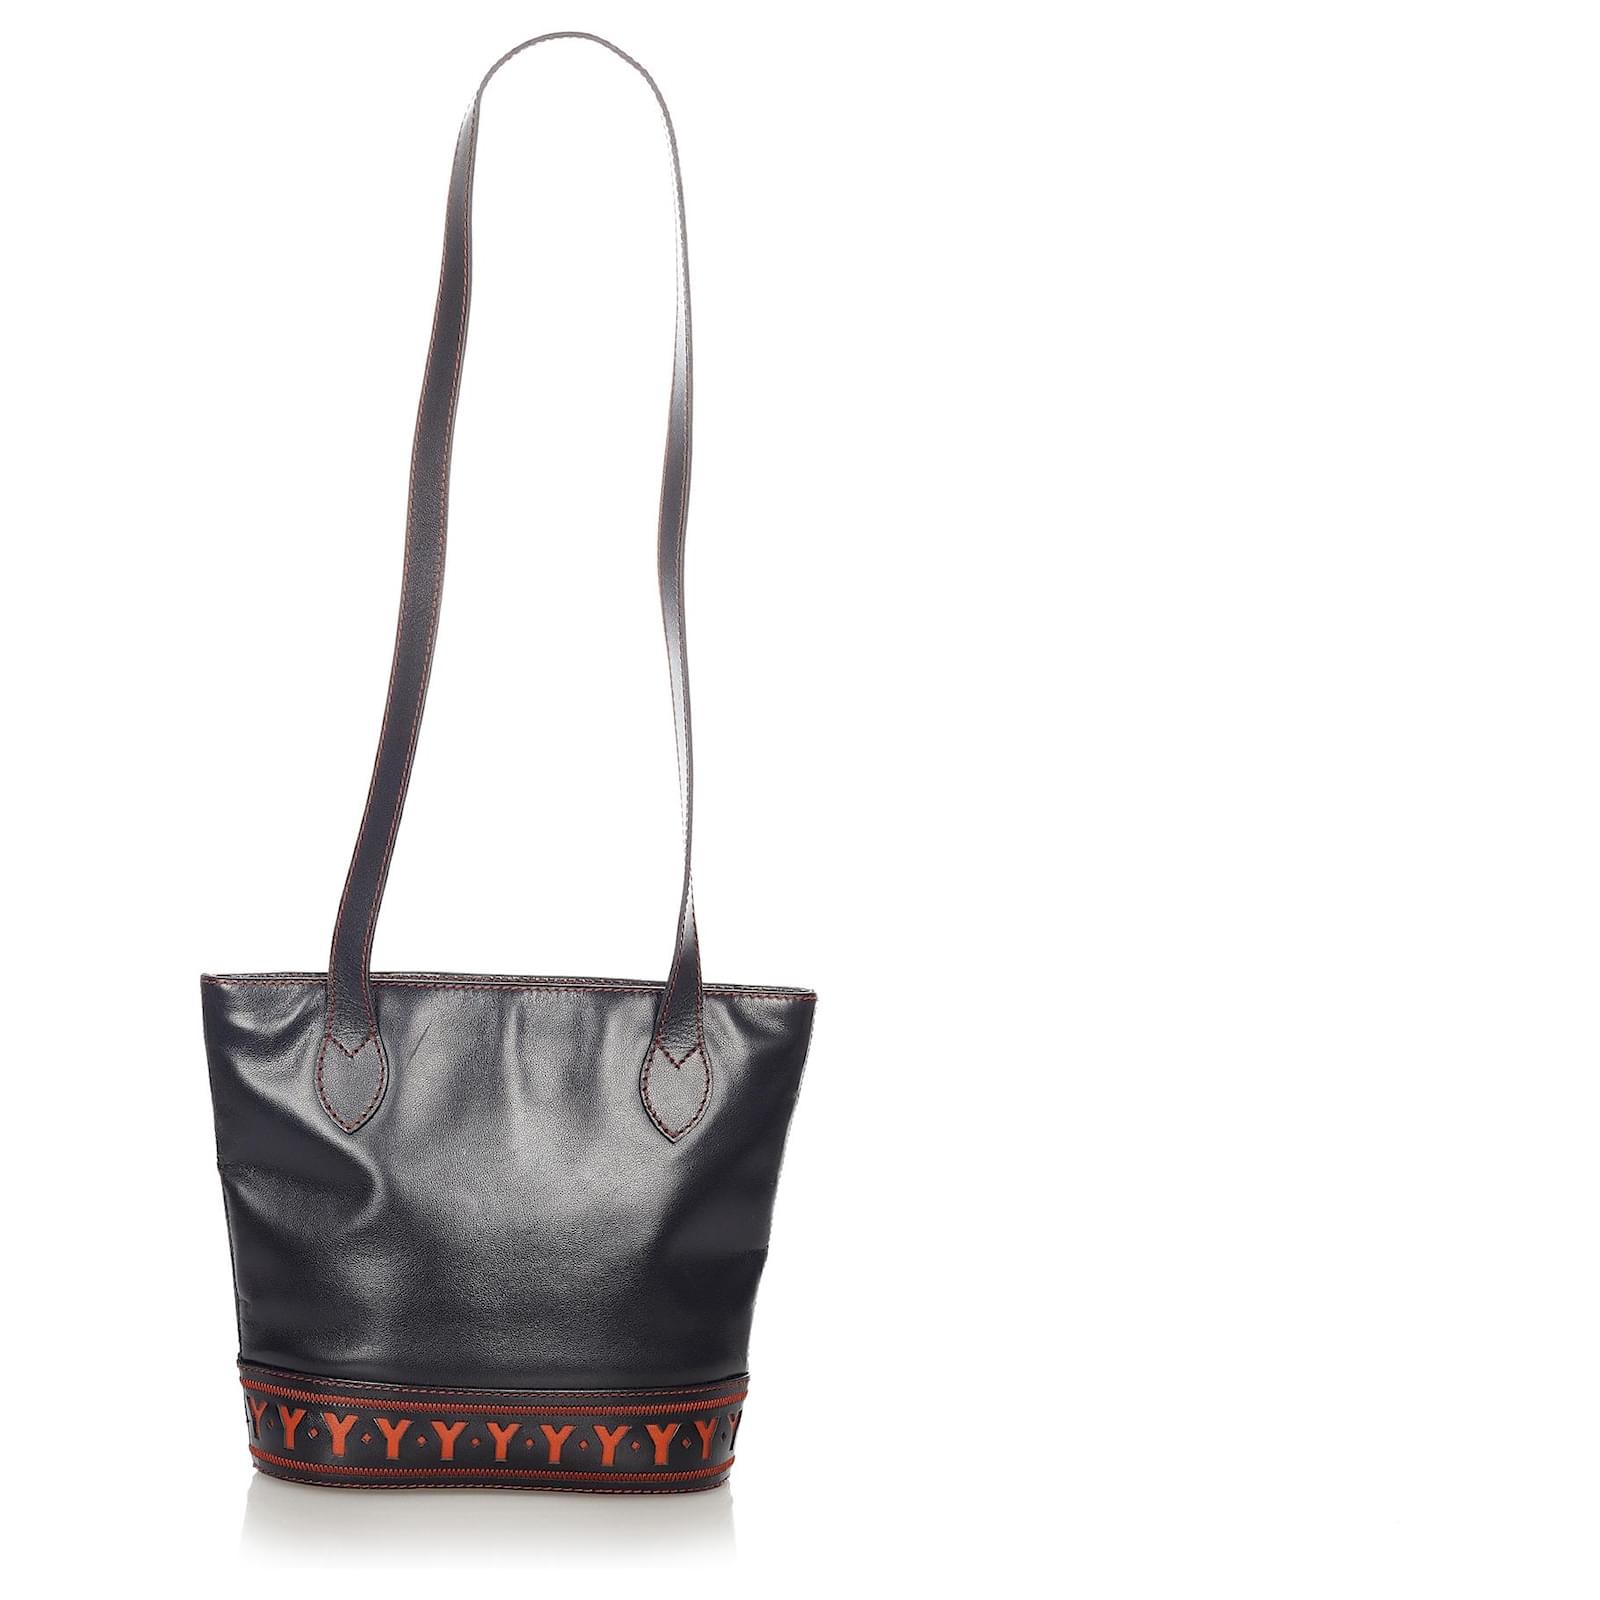 YVES SAINT LAURENT YSL Black / Brown Leather Tote bag One Shoulder